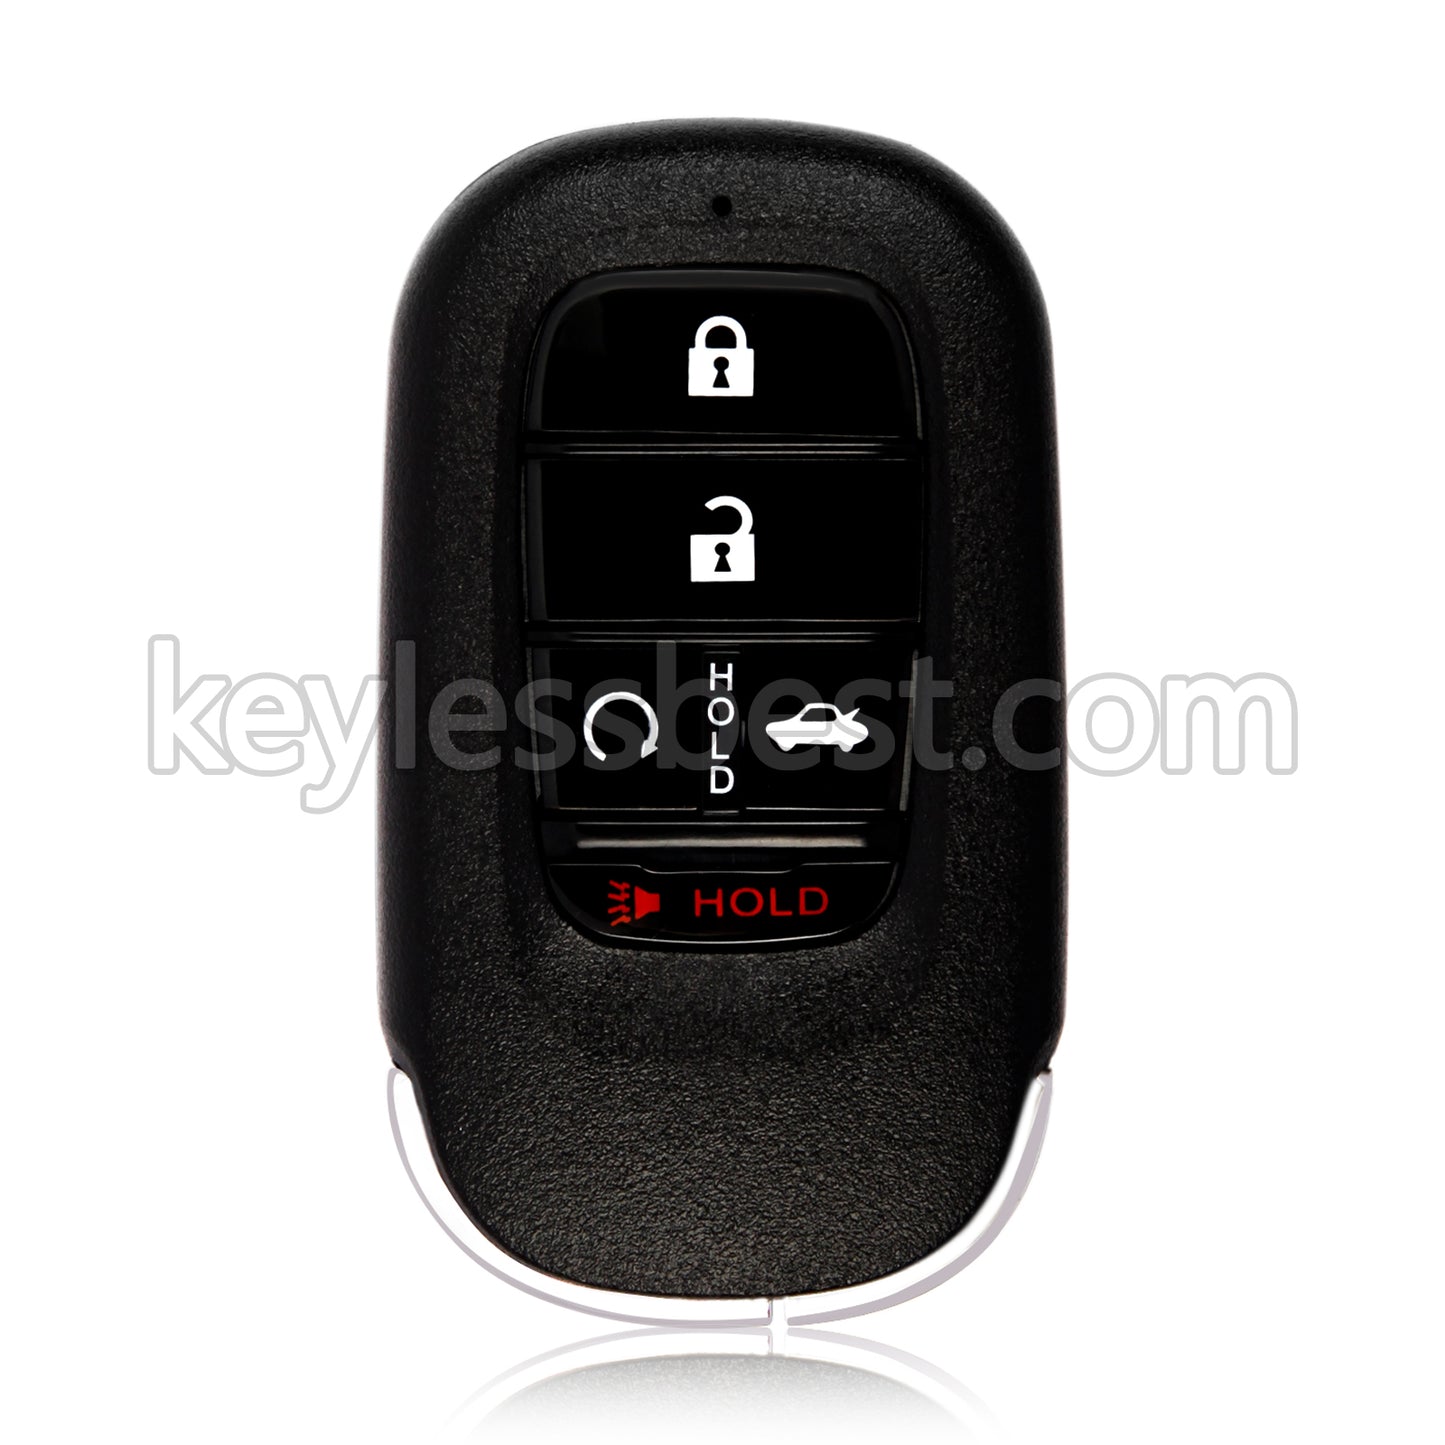 2022-2023 Honda Accord / 5 Buttons Remote Key / KR5TP-4 / 433MHz